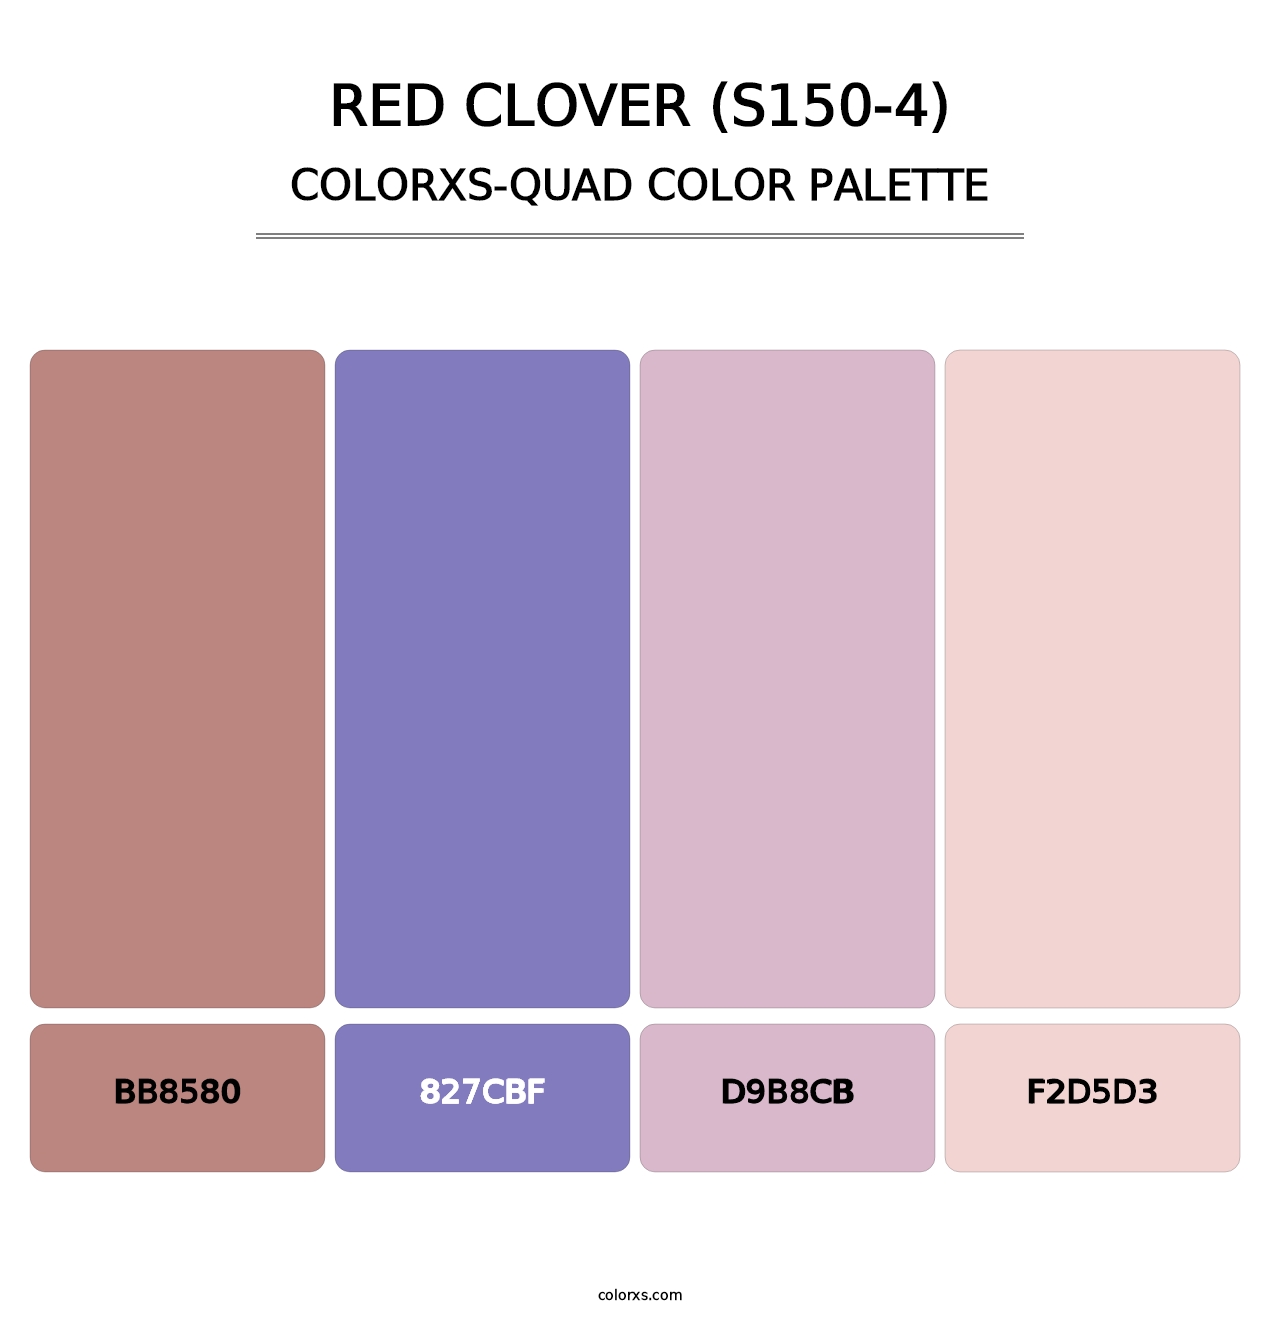 Red Clover (S150-4) - Colorxs Quad Palette